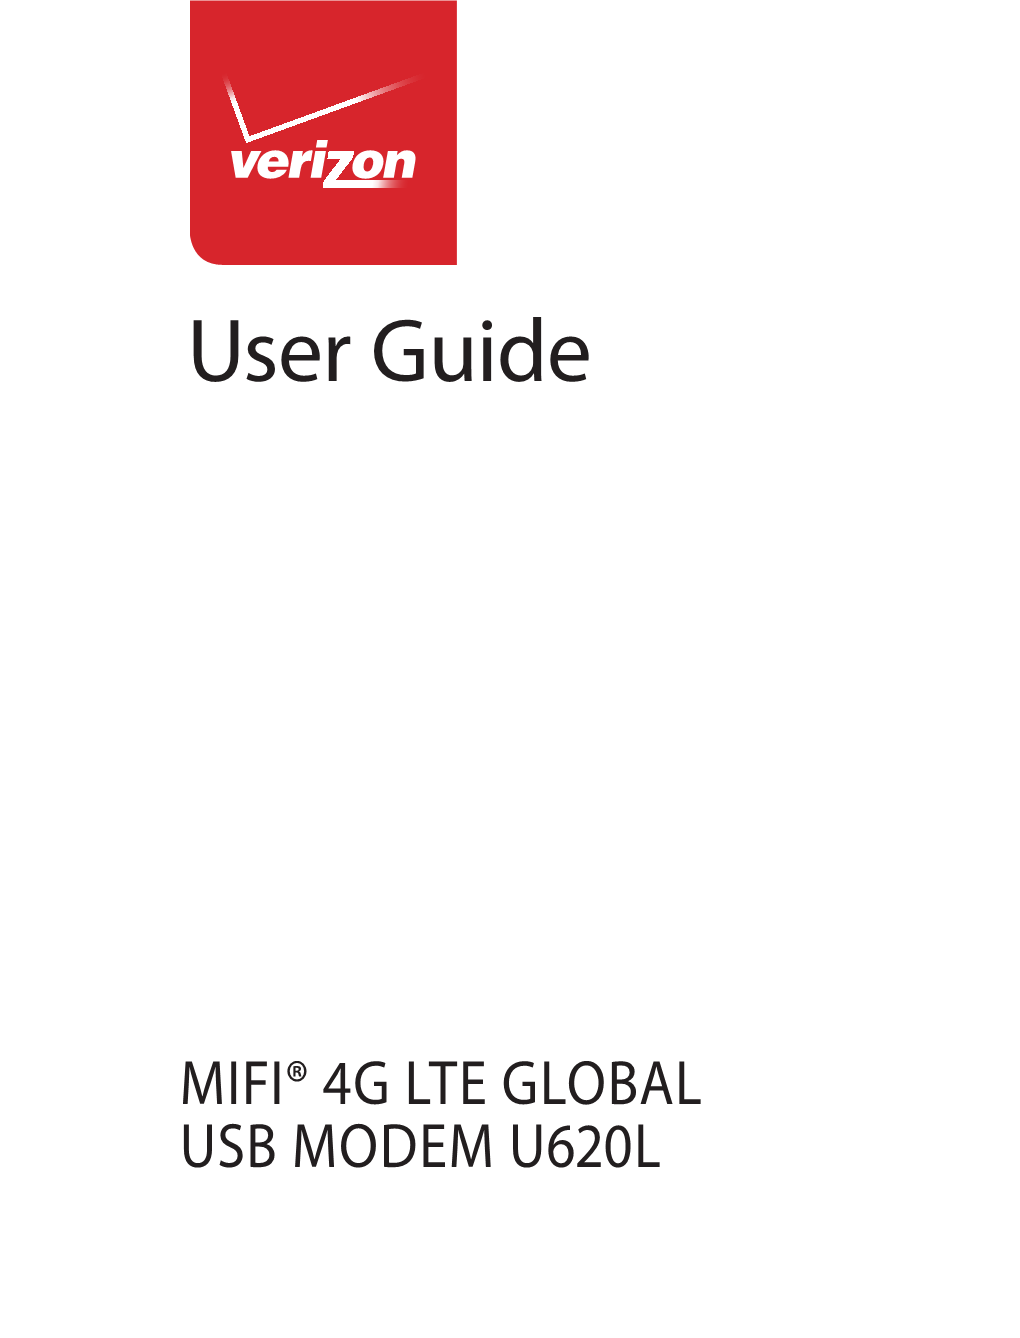 VZW Mifi 4G LTE USB Modem